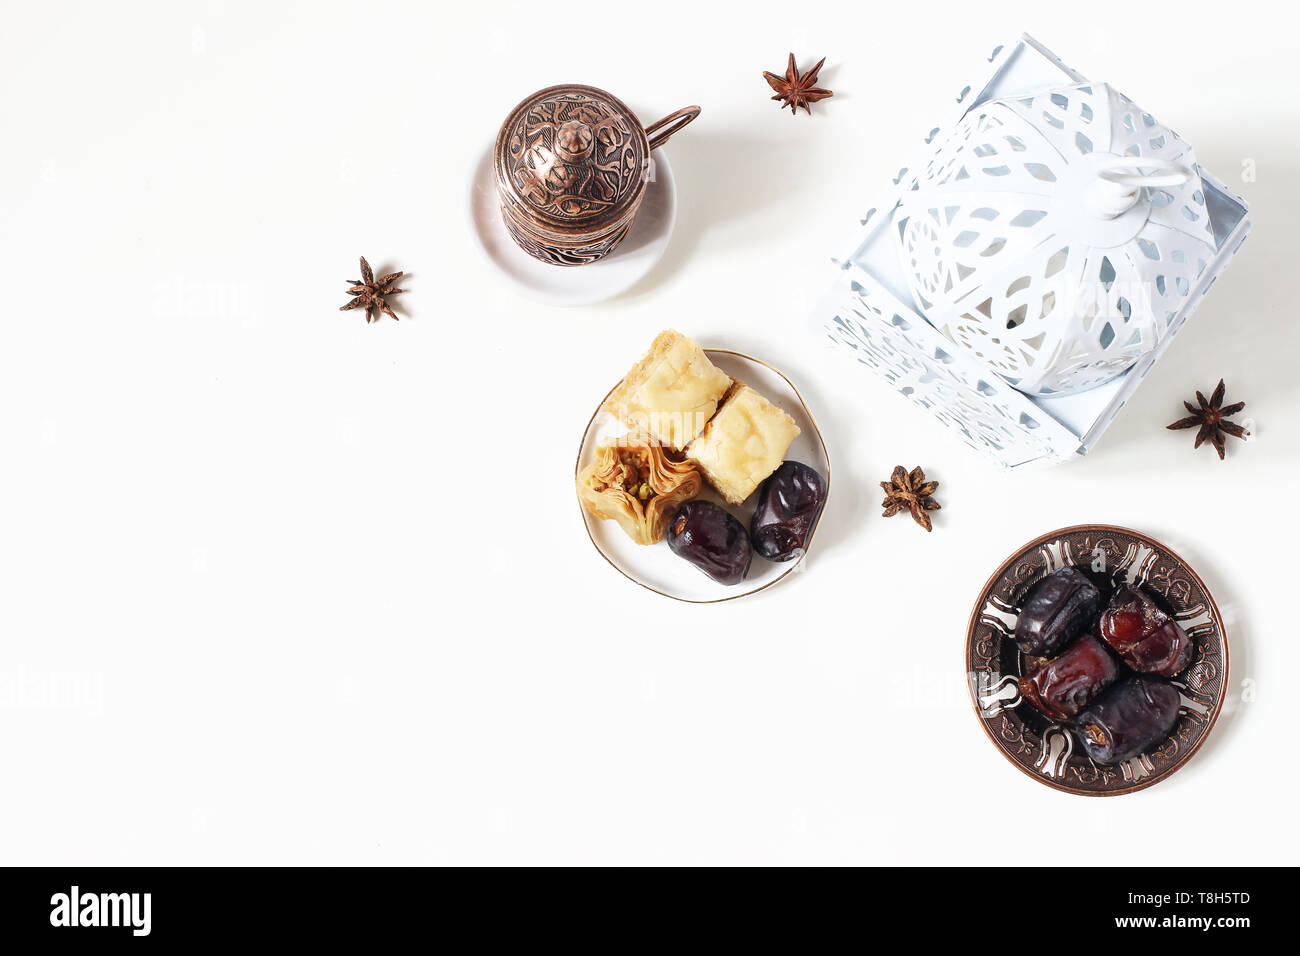 Ramadan Kareem greeting card, invitation. White lantern, bronze plate with dates fruit, baklava pastry, coffee cup on table. Iftar dinner. Eid ul Adha Stock Photo